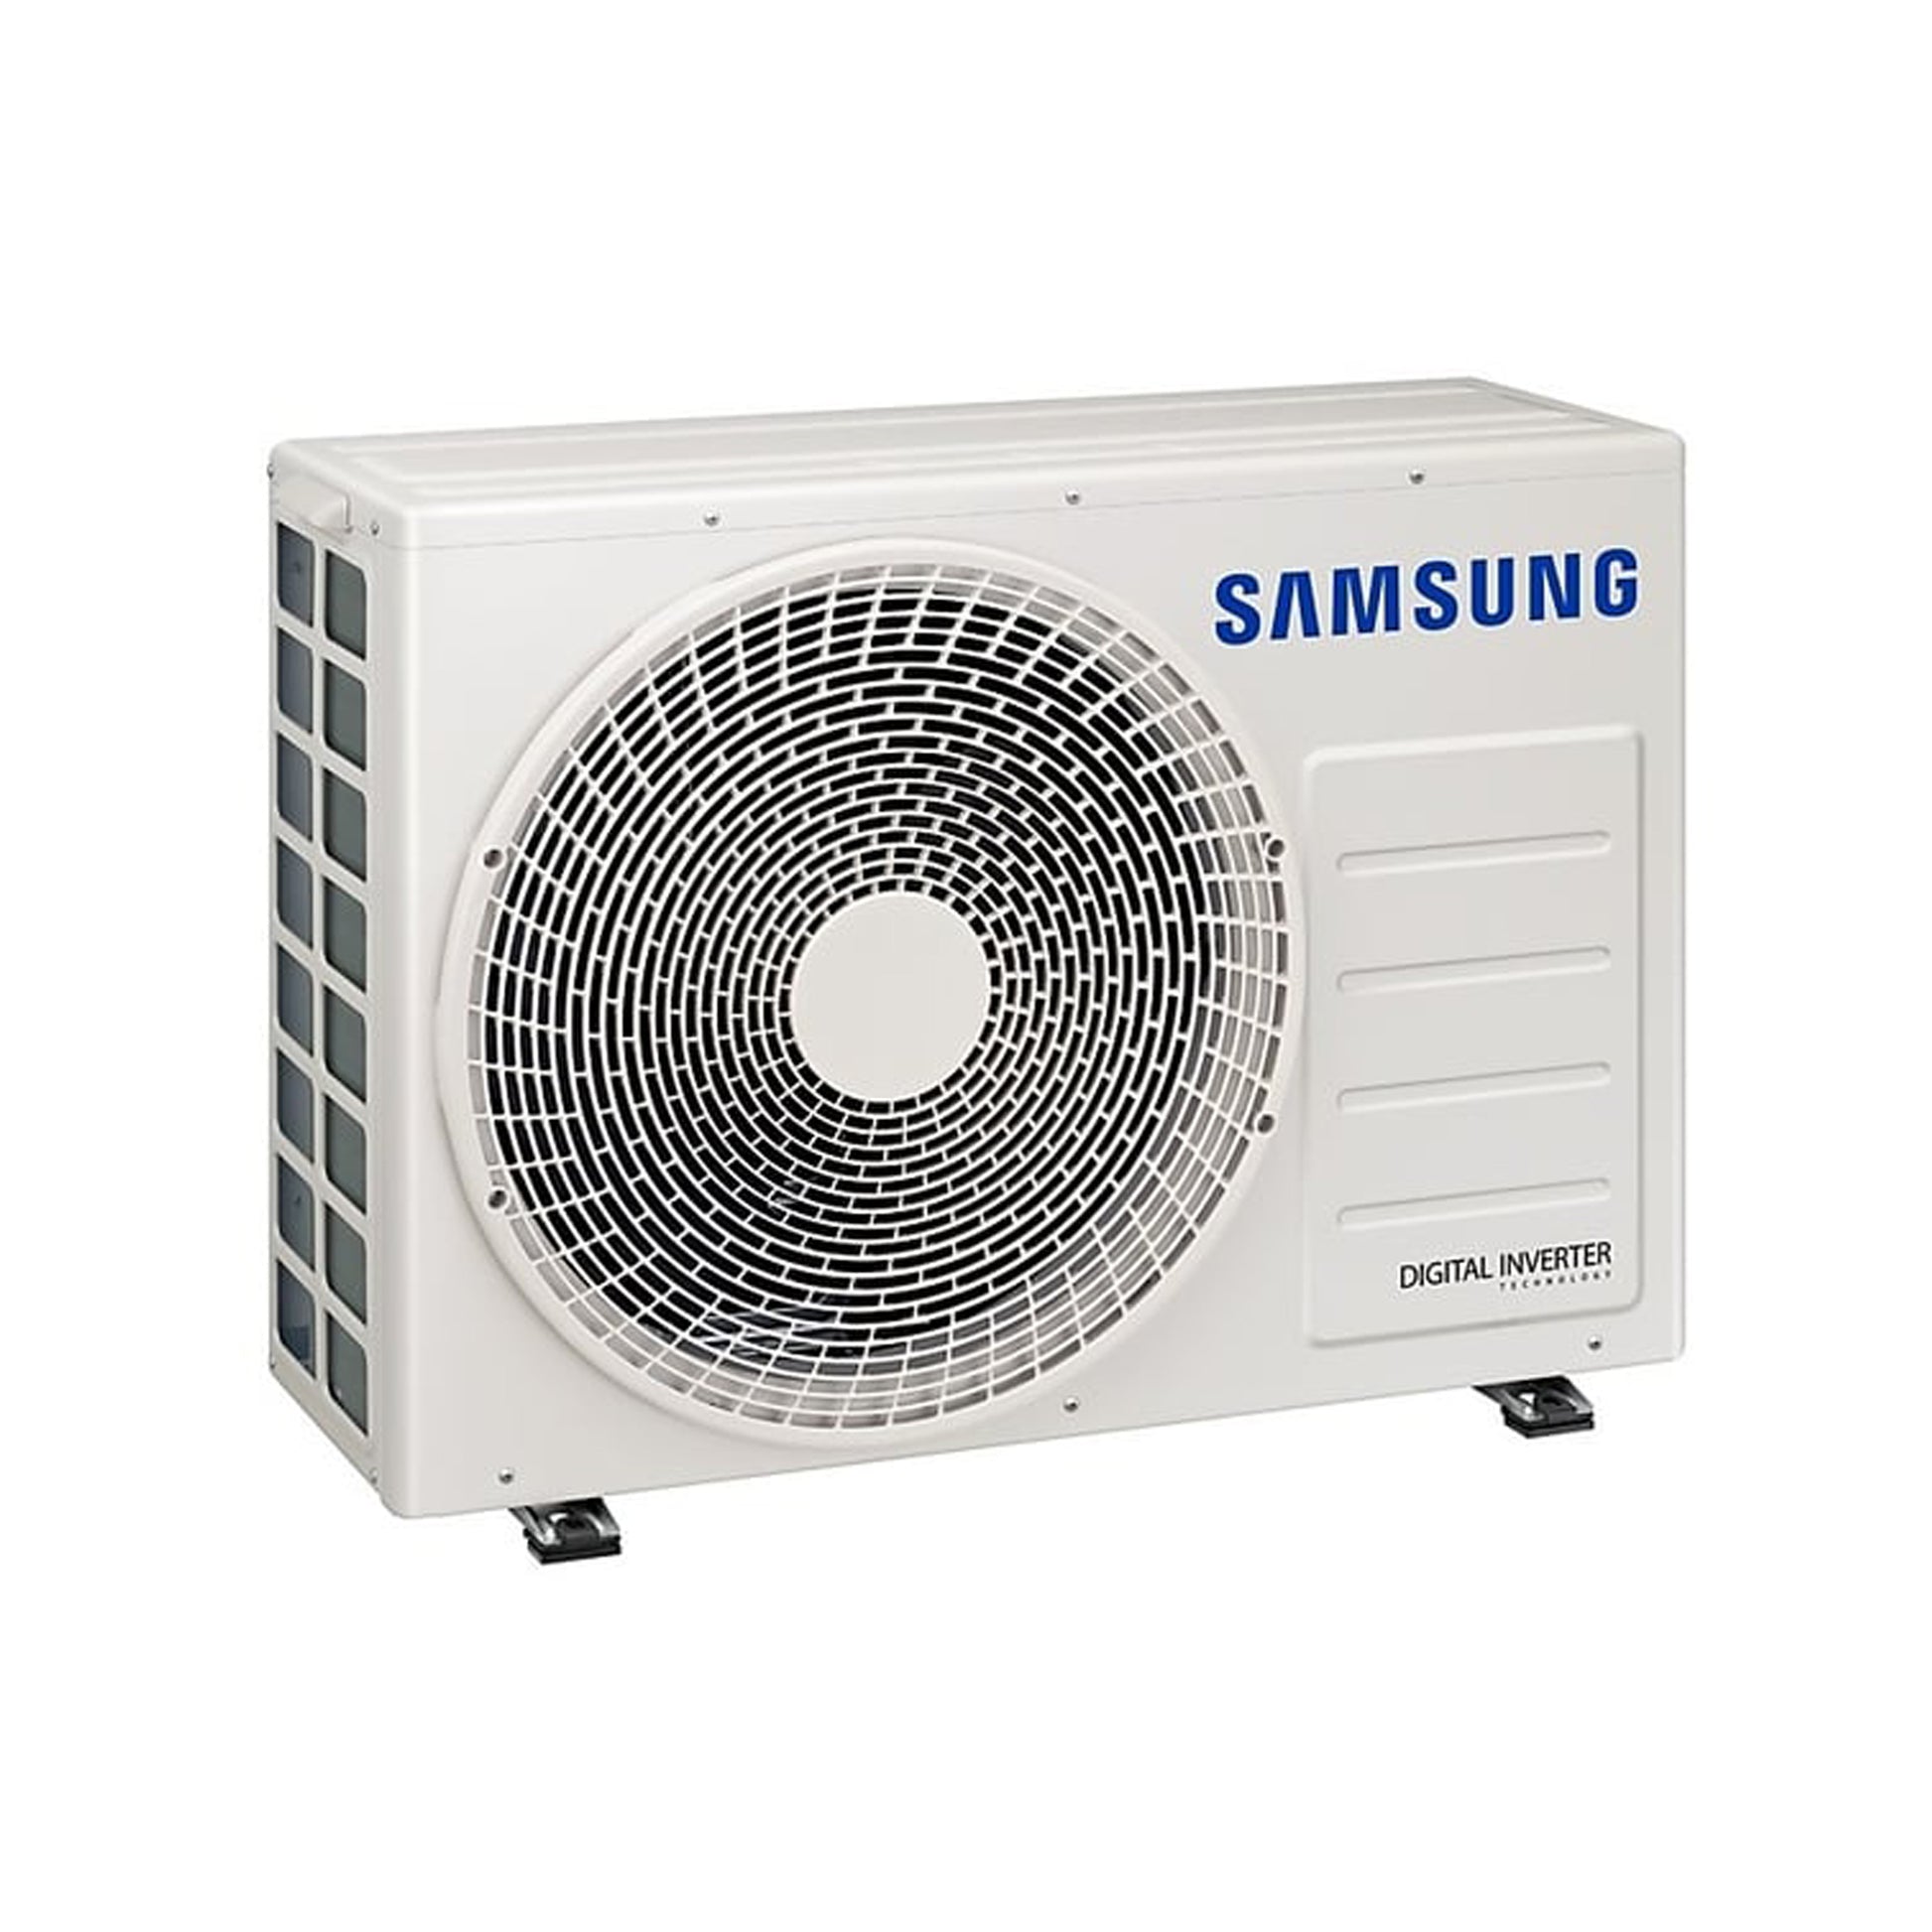 Samsung 1.5 Ton Digital Inverter Split Air Conditioner, AR18TVFZEWK